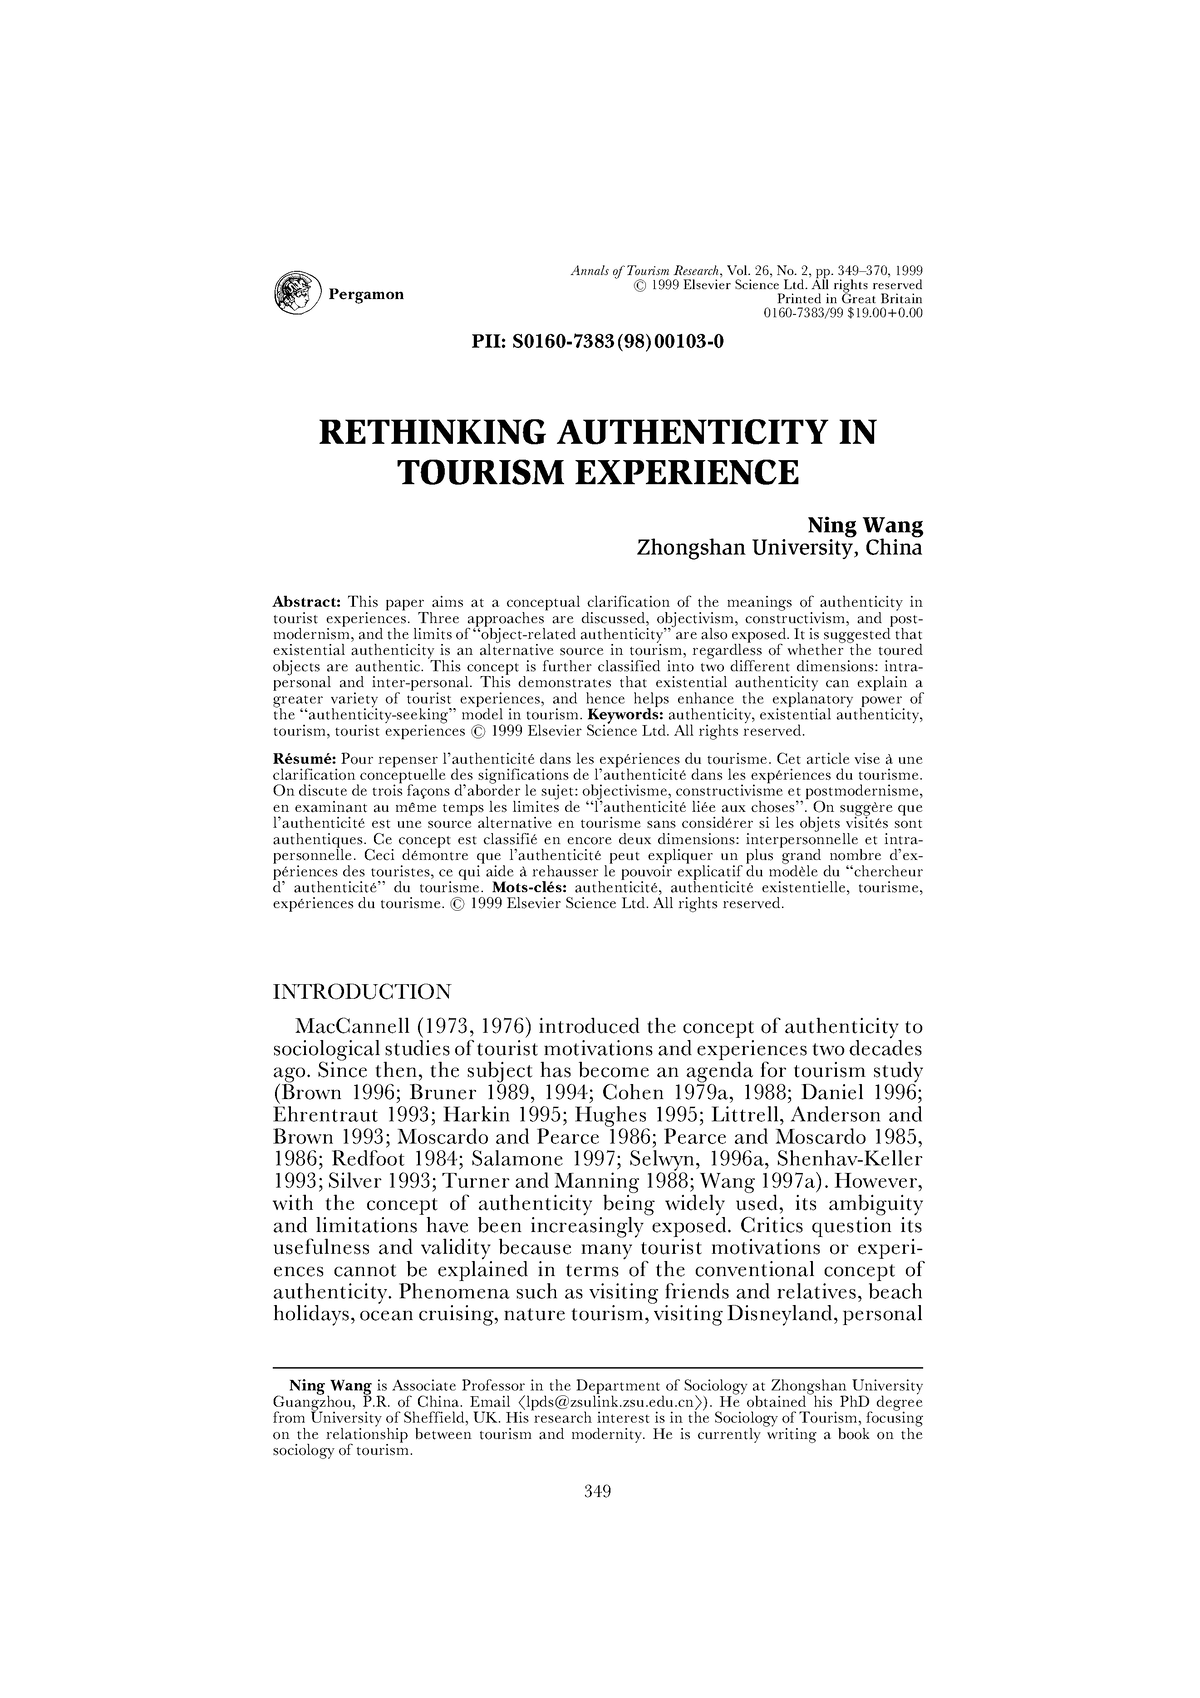 annals of tourism research empirical insights